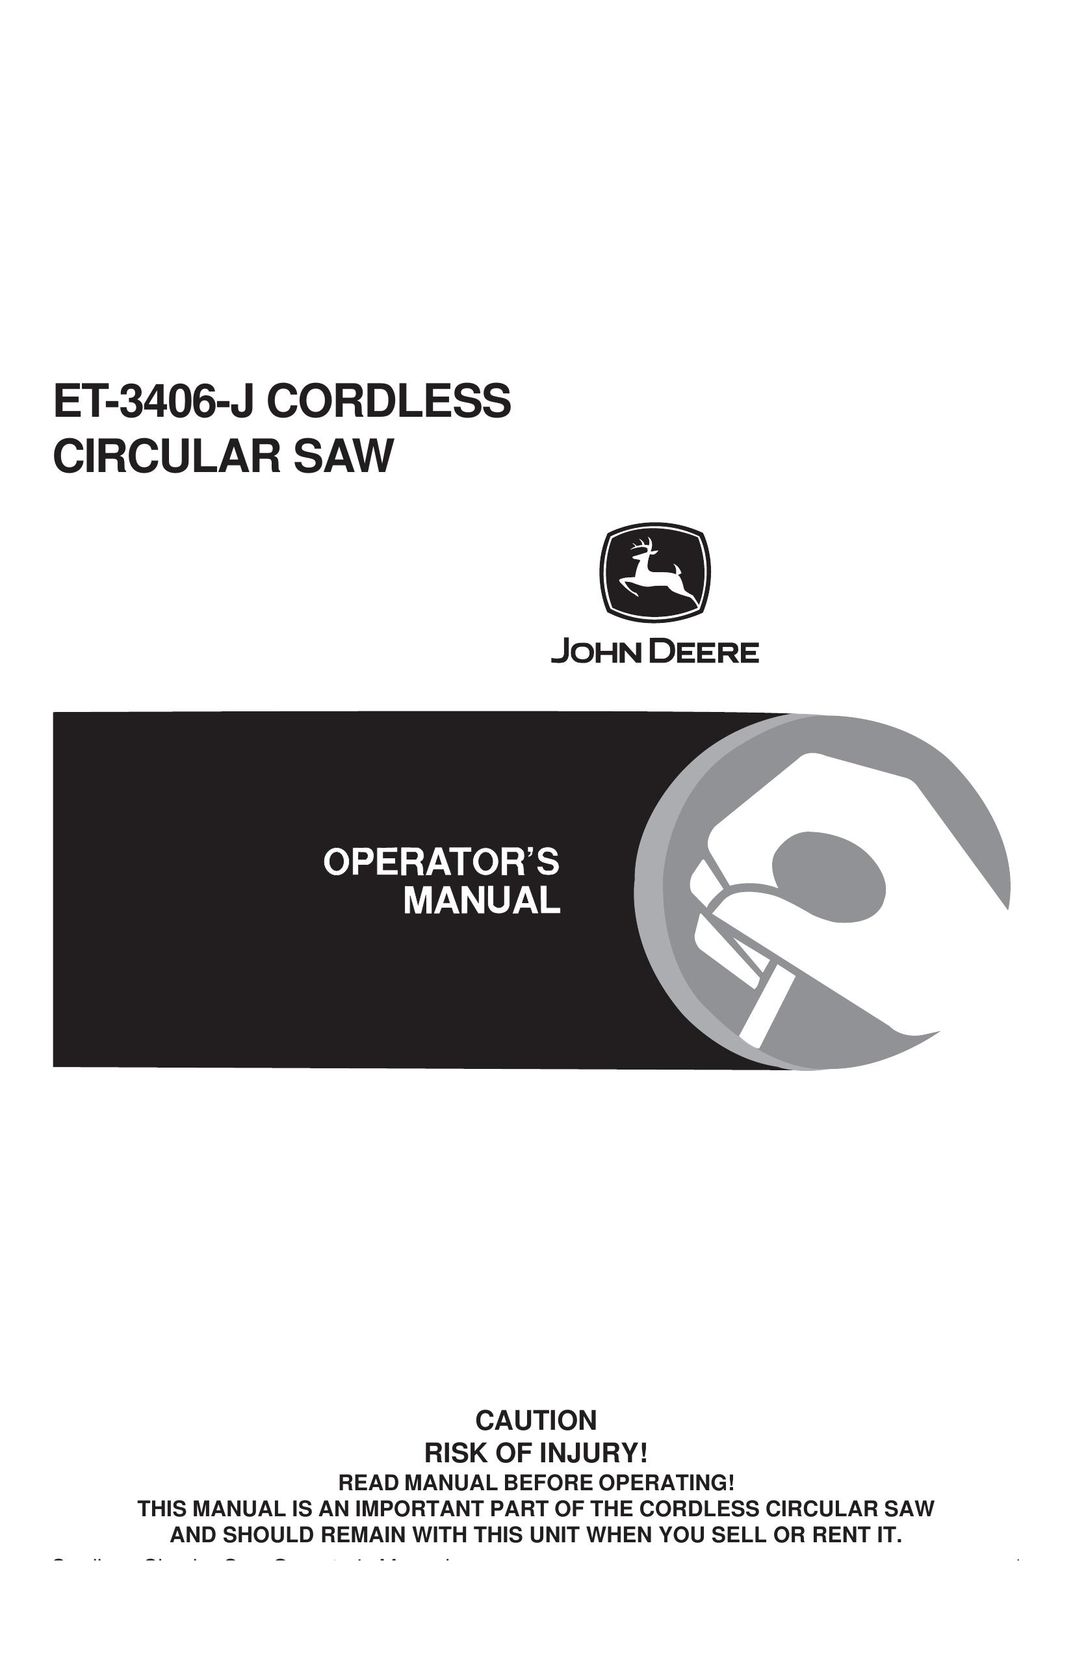 John Deere ET-3406-J Cordless Saw User Manual